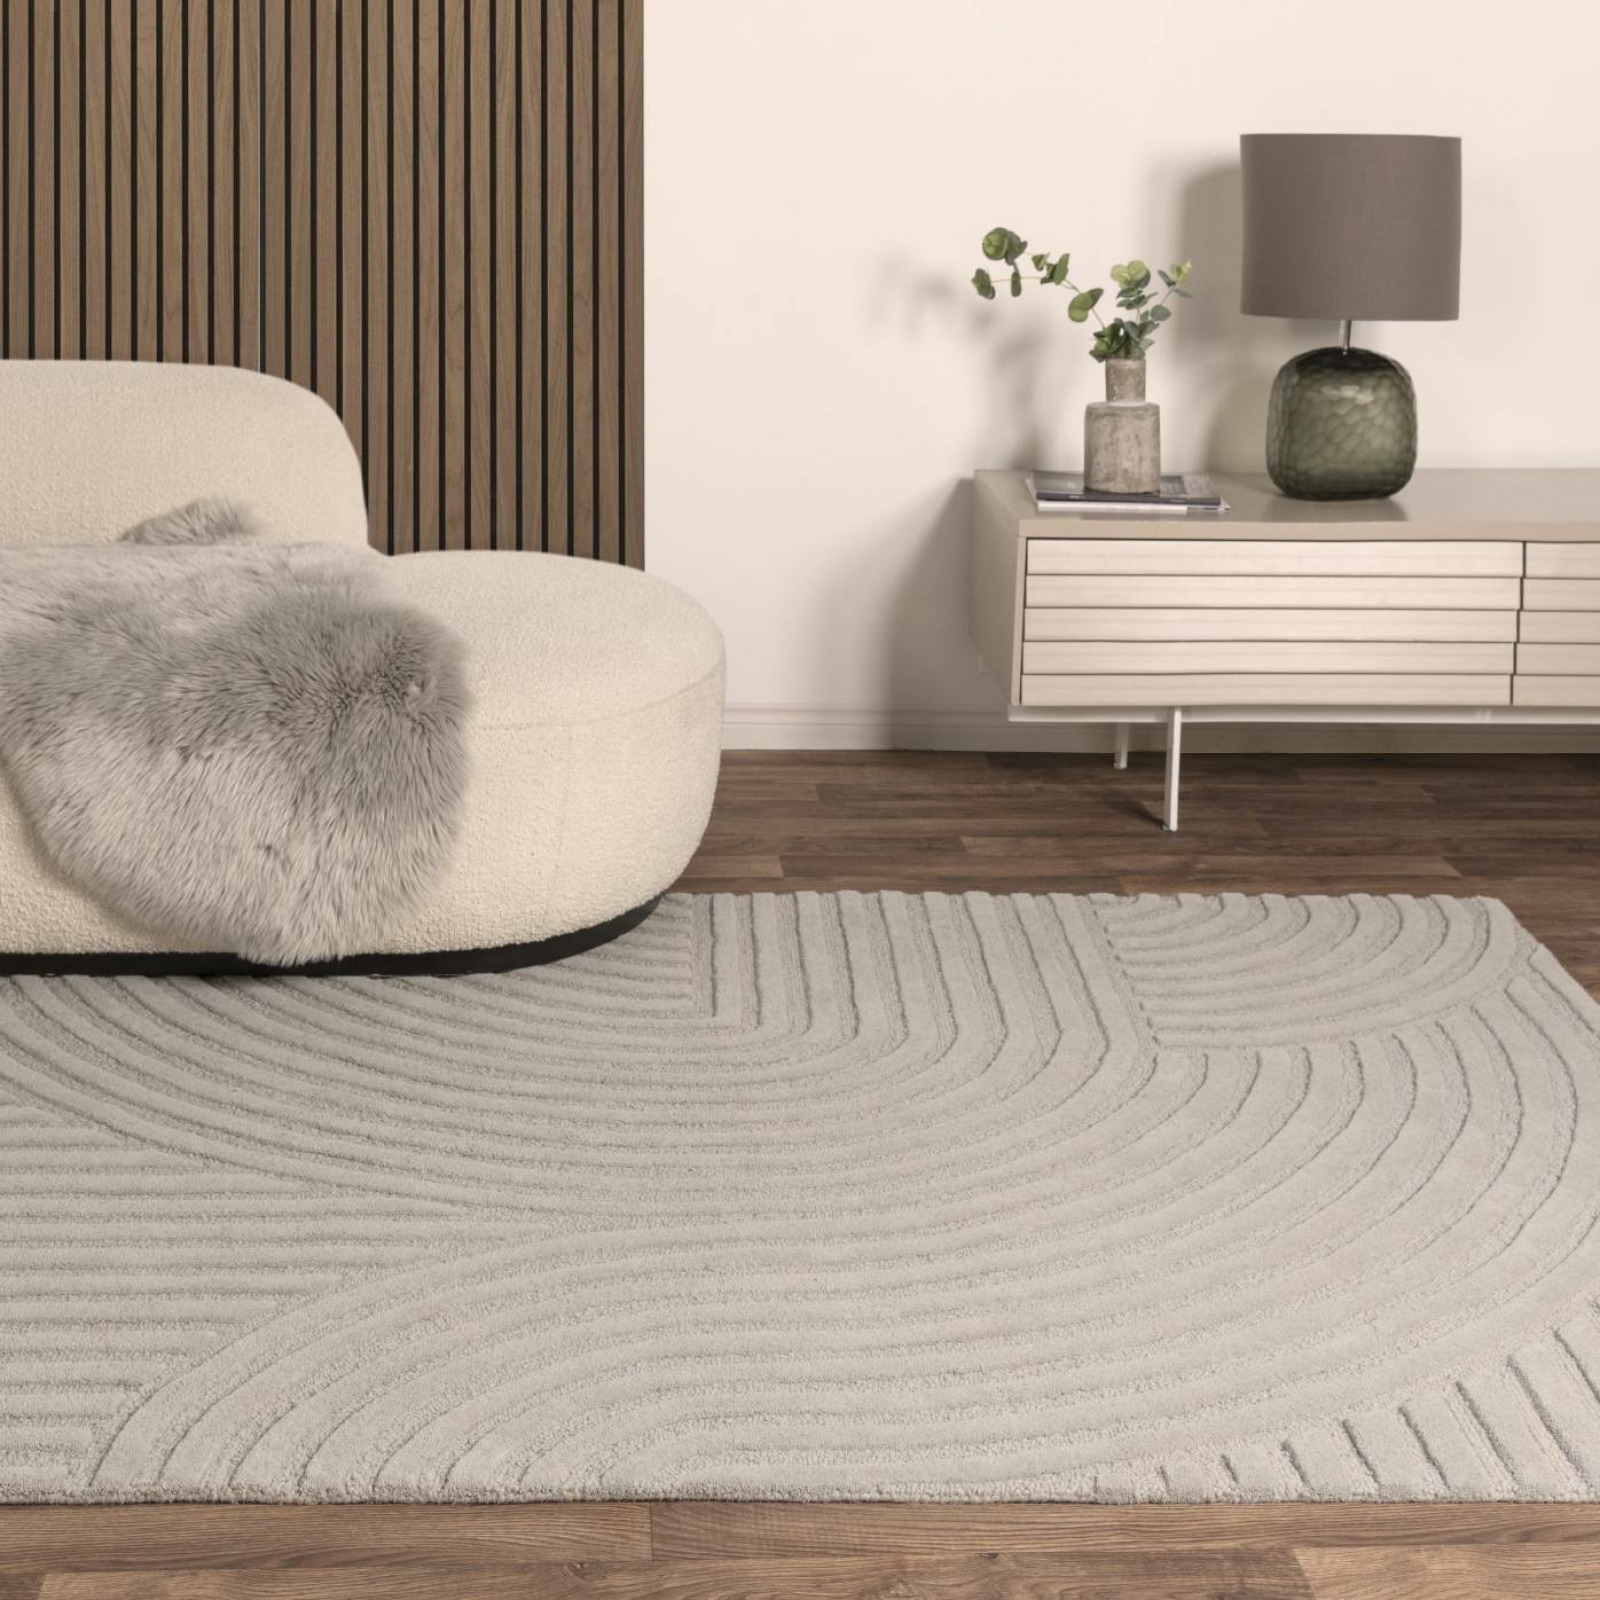 Hague grey carpet